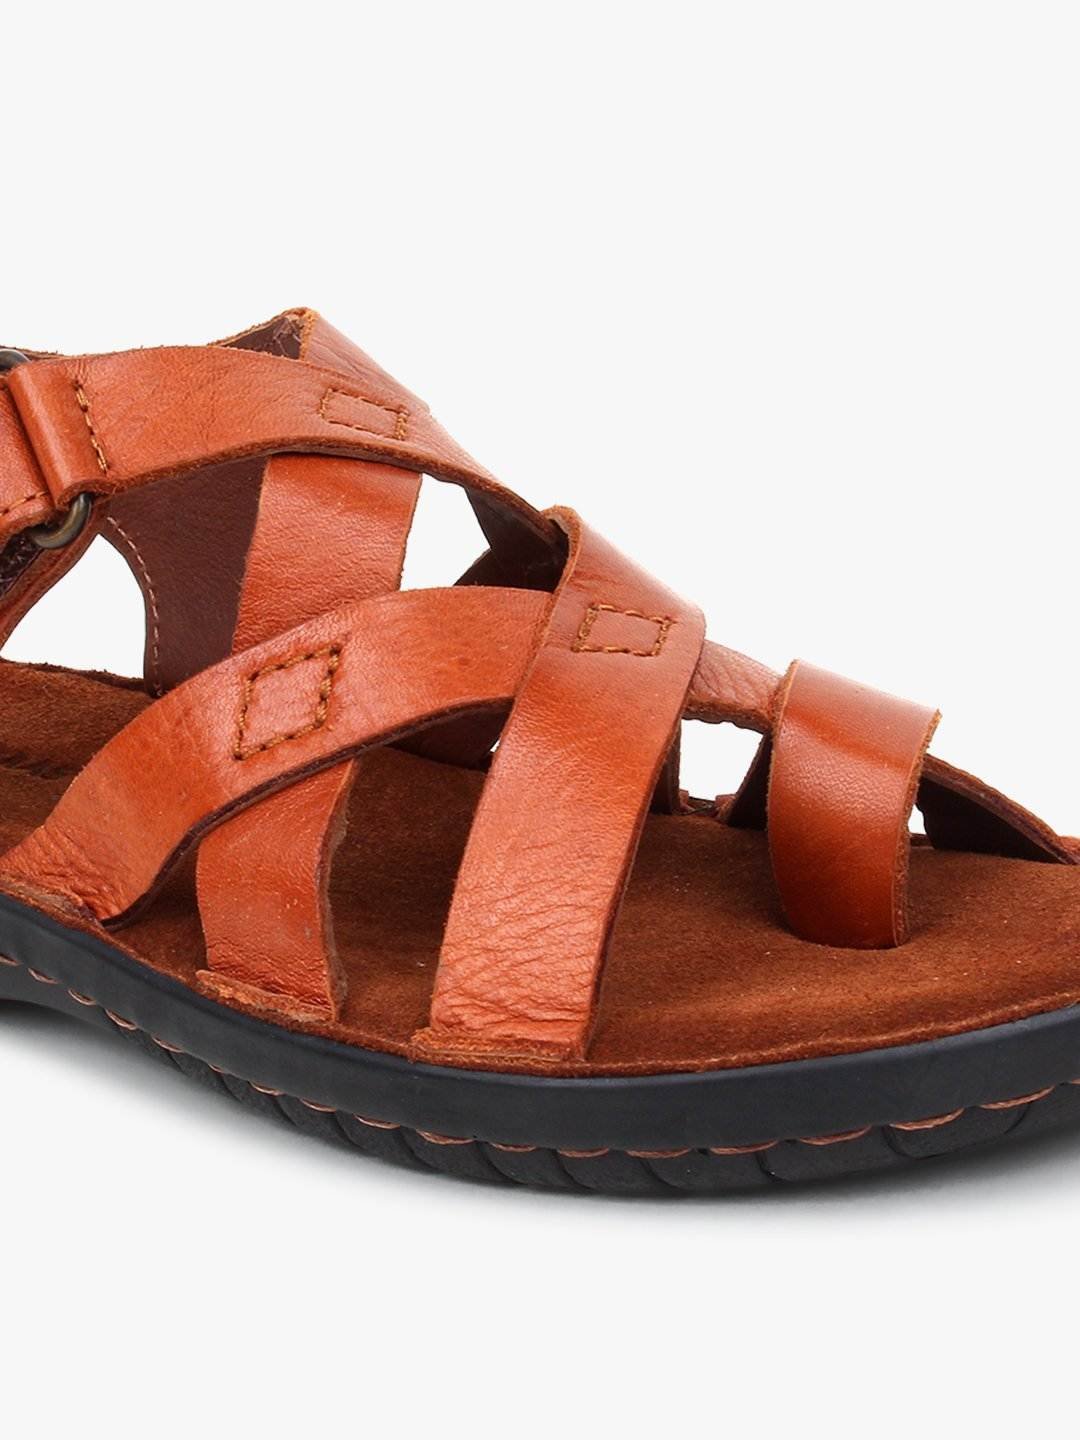 Buy Men Brown Casual Sandals Online | SKU: 18-1603-12-40-Metro Shoes